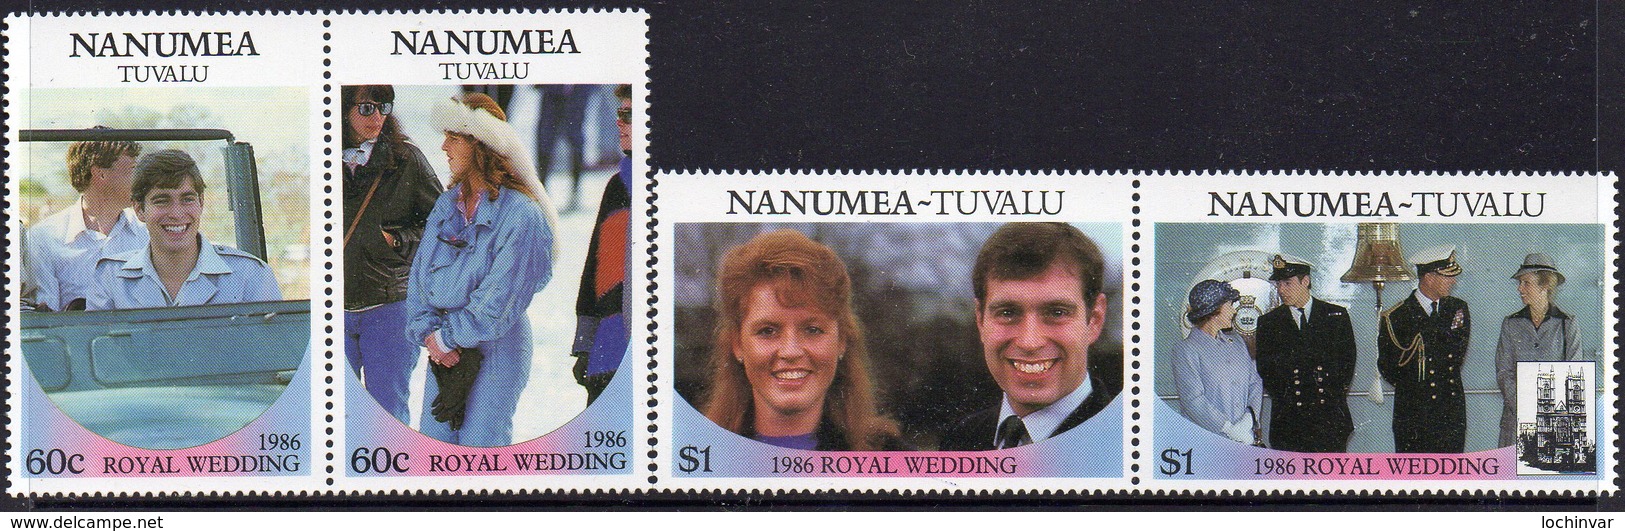 TUVALU,NANUMEA, 1986 ROYAL WEDDING 4 MNH - Tuvalu